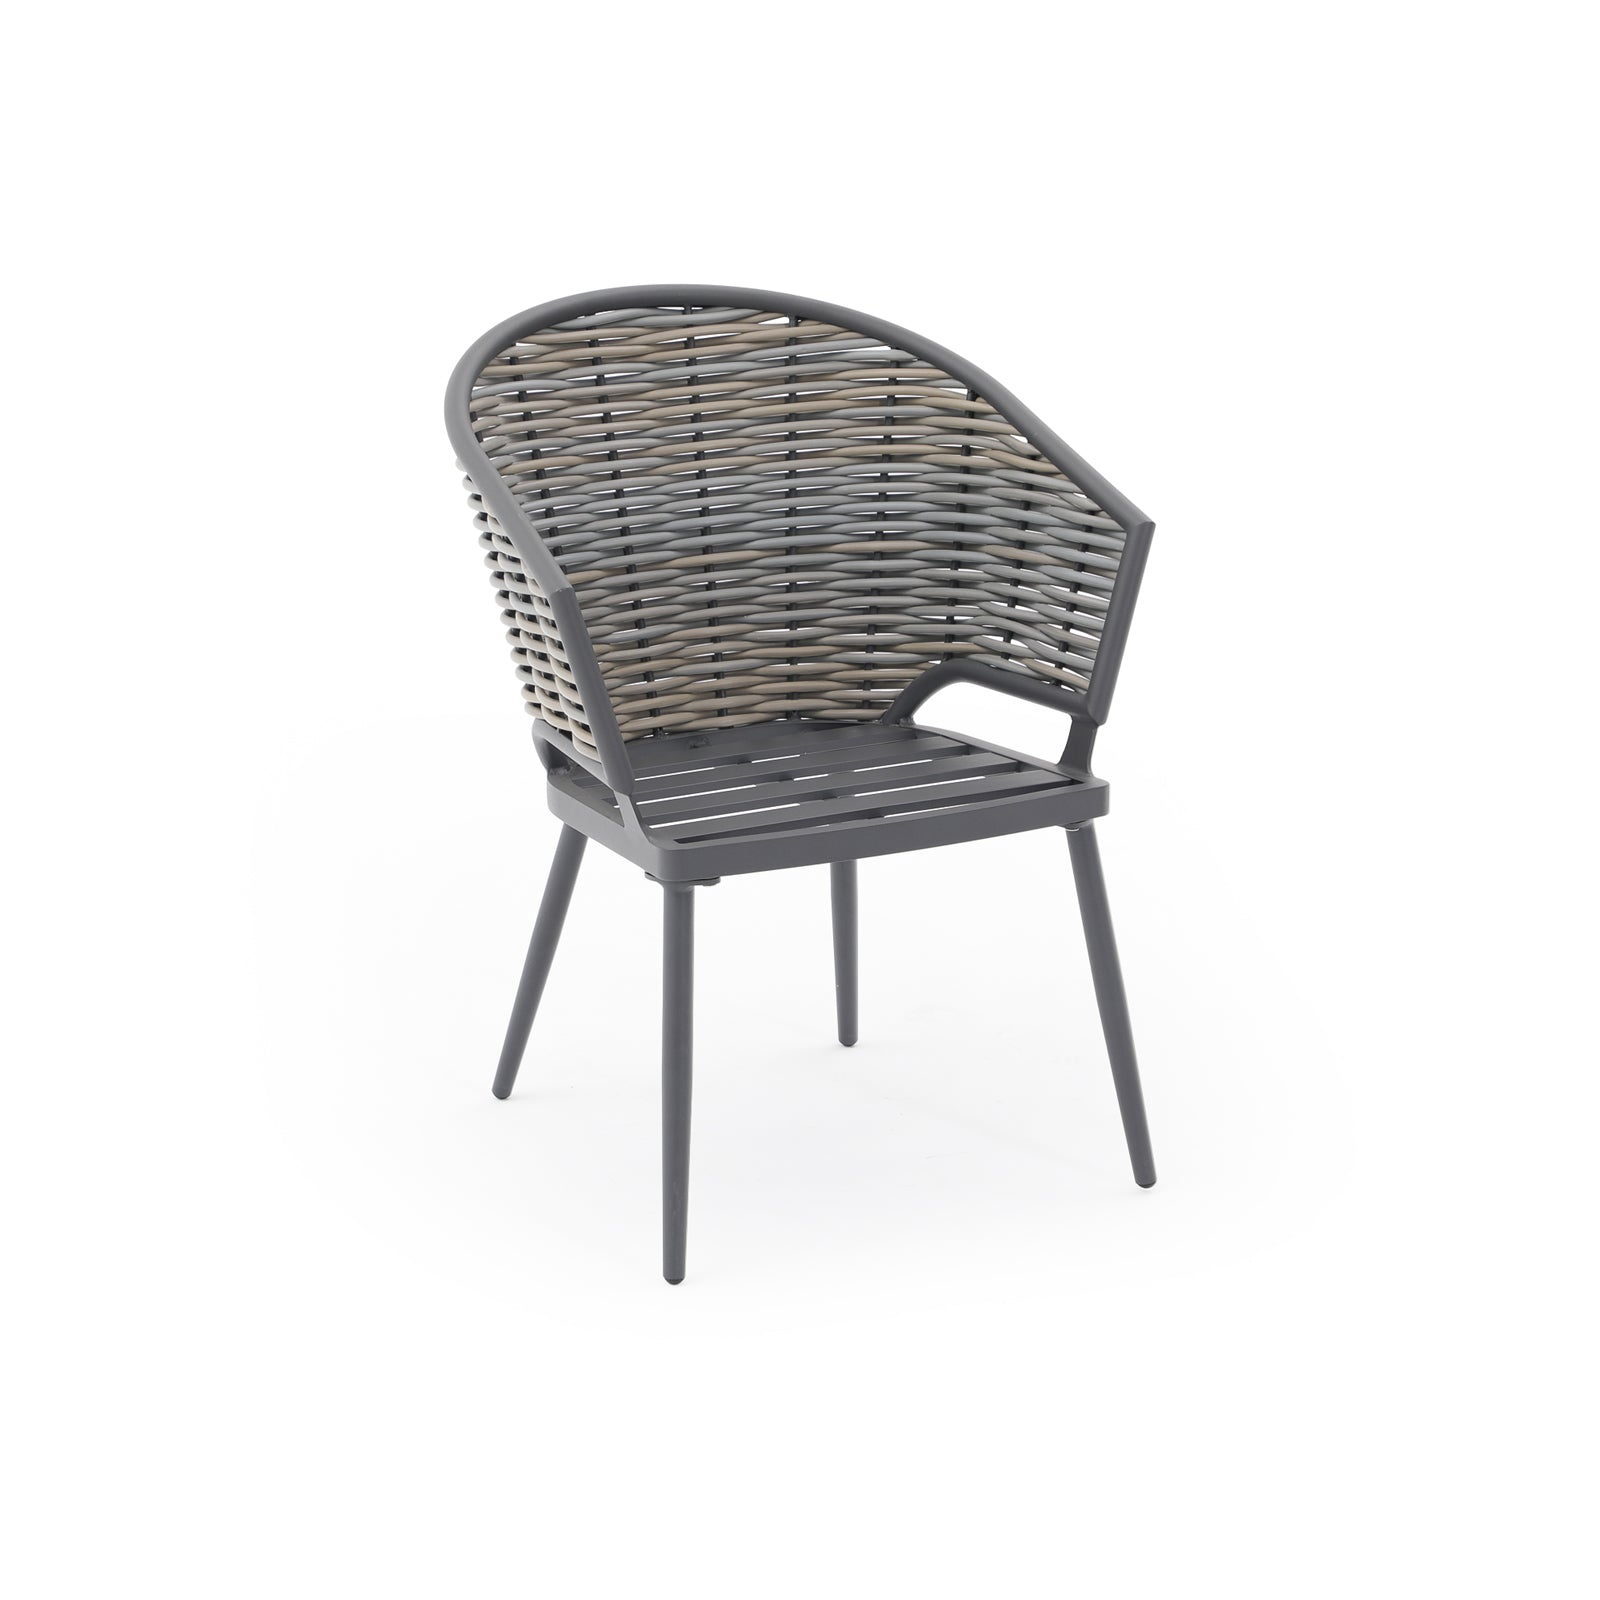 Burano Grey wicker outdoor dining chair with grey cushion, aluminum frame -Jardina Furniture